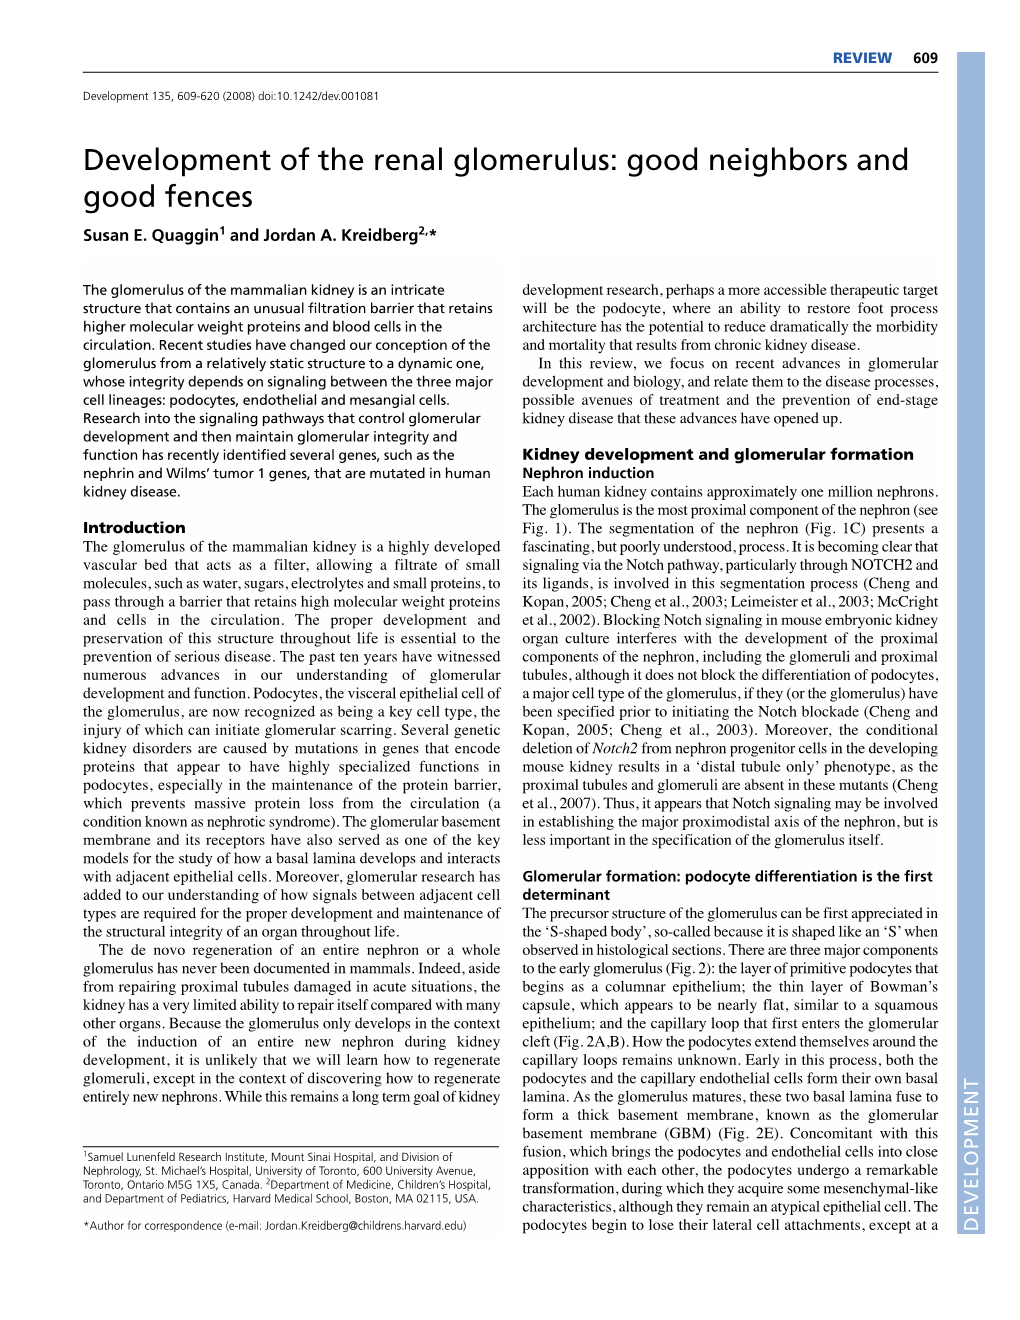 Development of the Renal Glomerulus: Good Neighbors and Good Fences Susan E